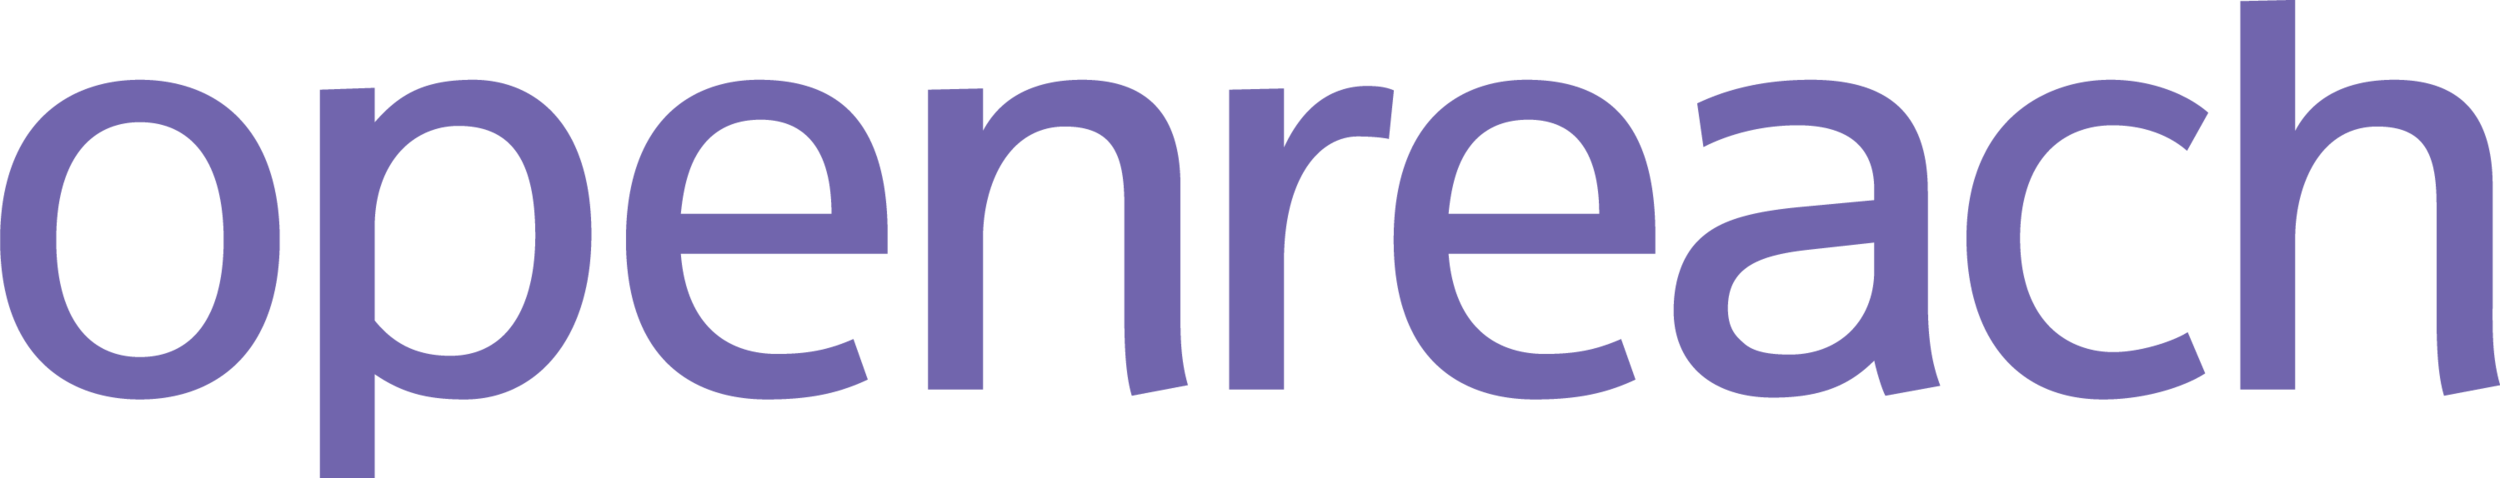 Openreach Logo_Purple_CMYK.png